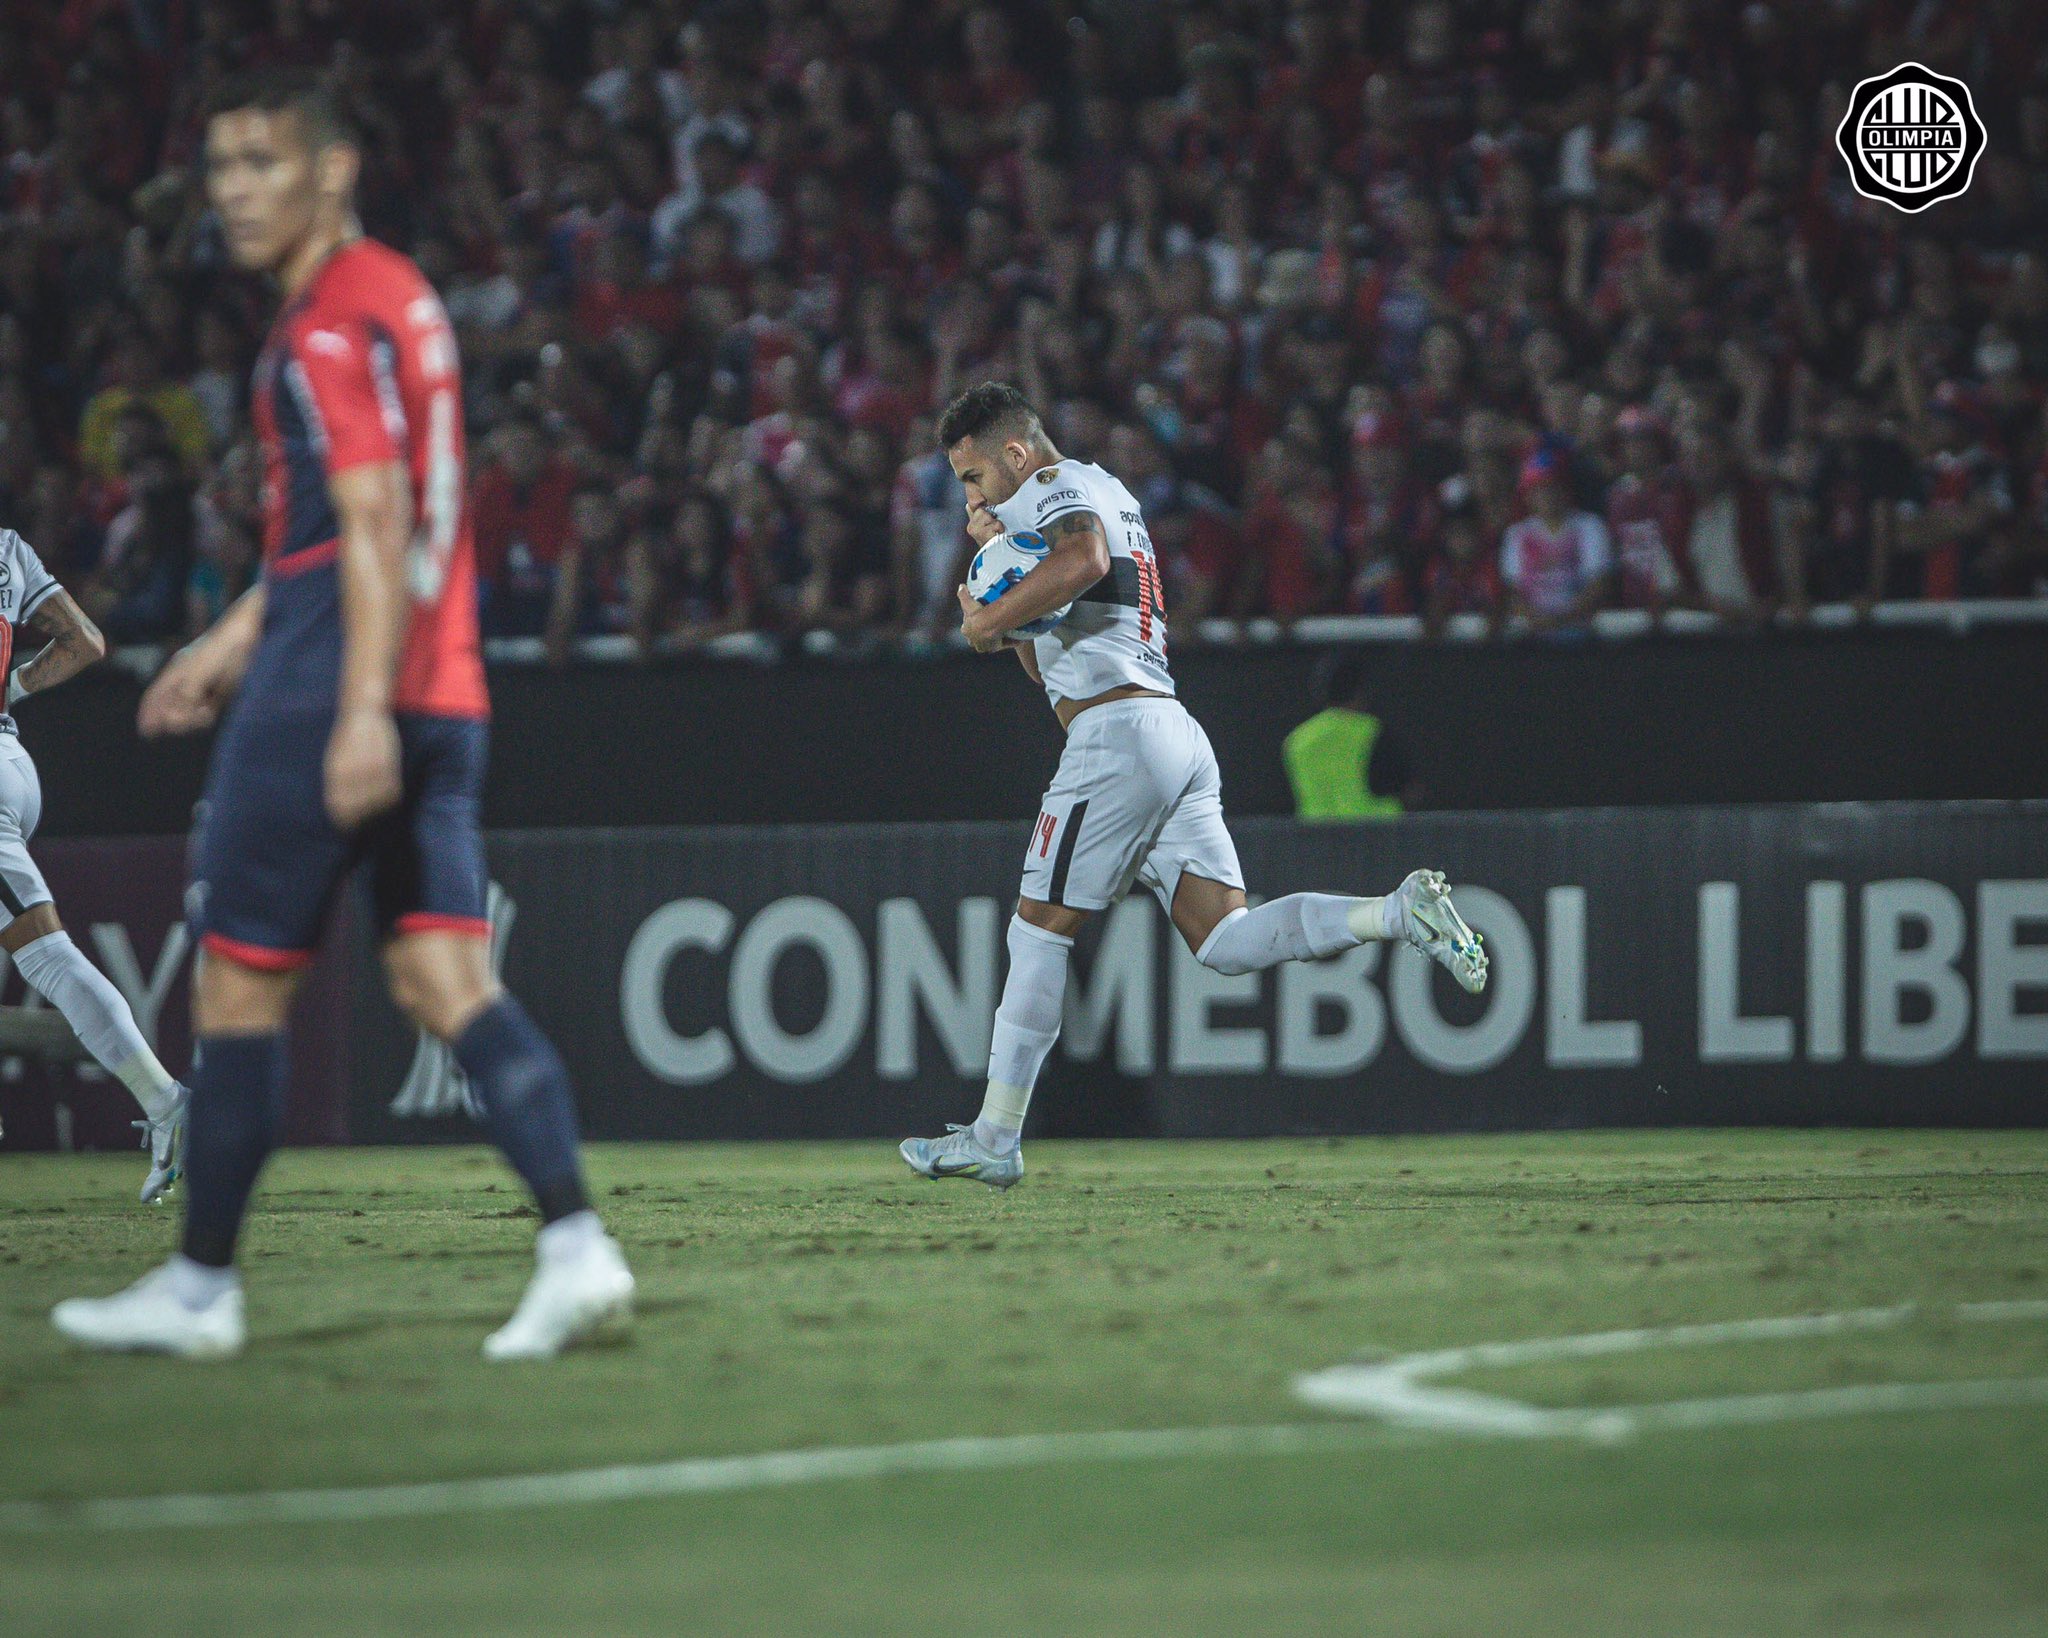 Cerro cayó ante Olimpia por 1-0 en LNO. Foto: Olimpia Media.